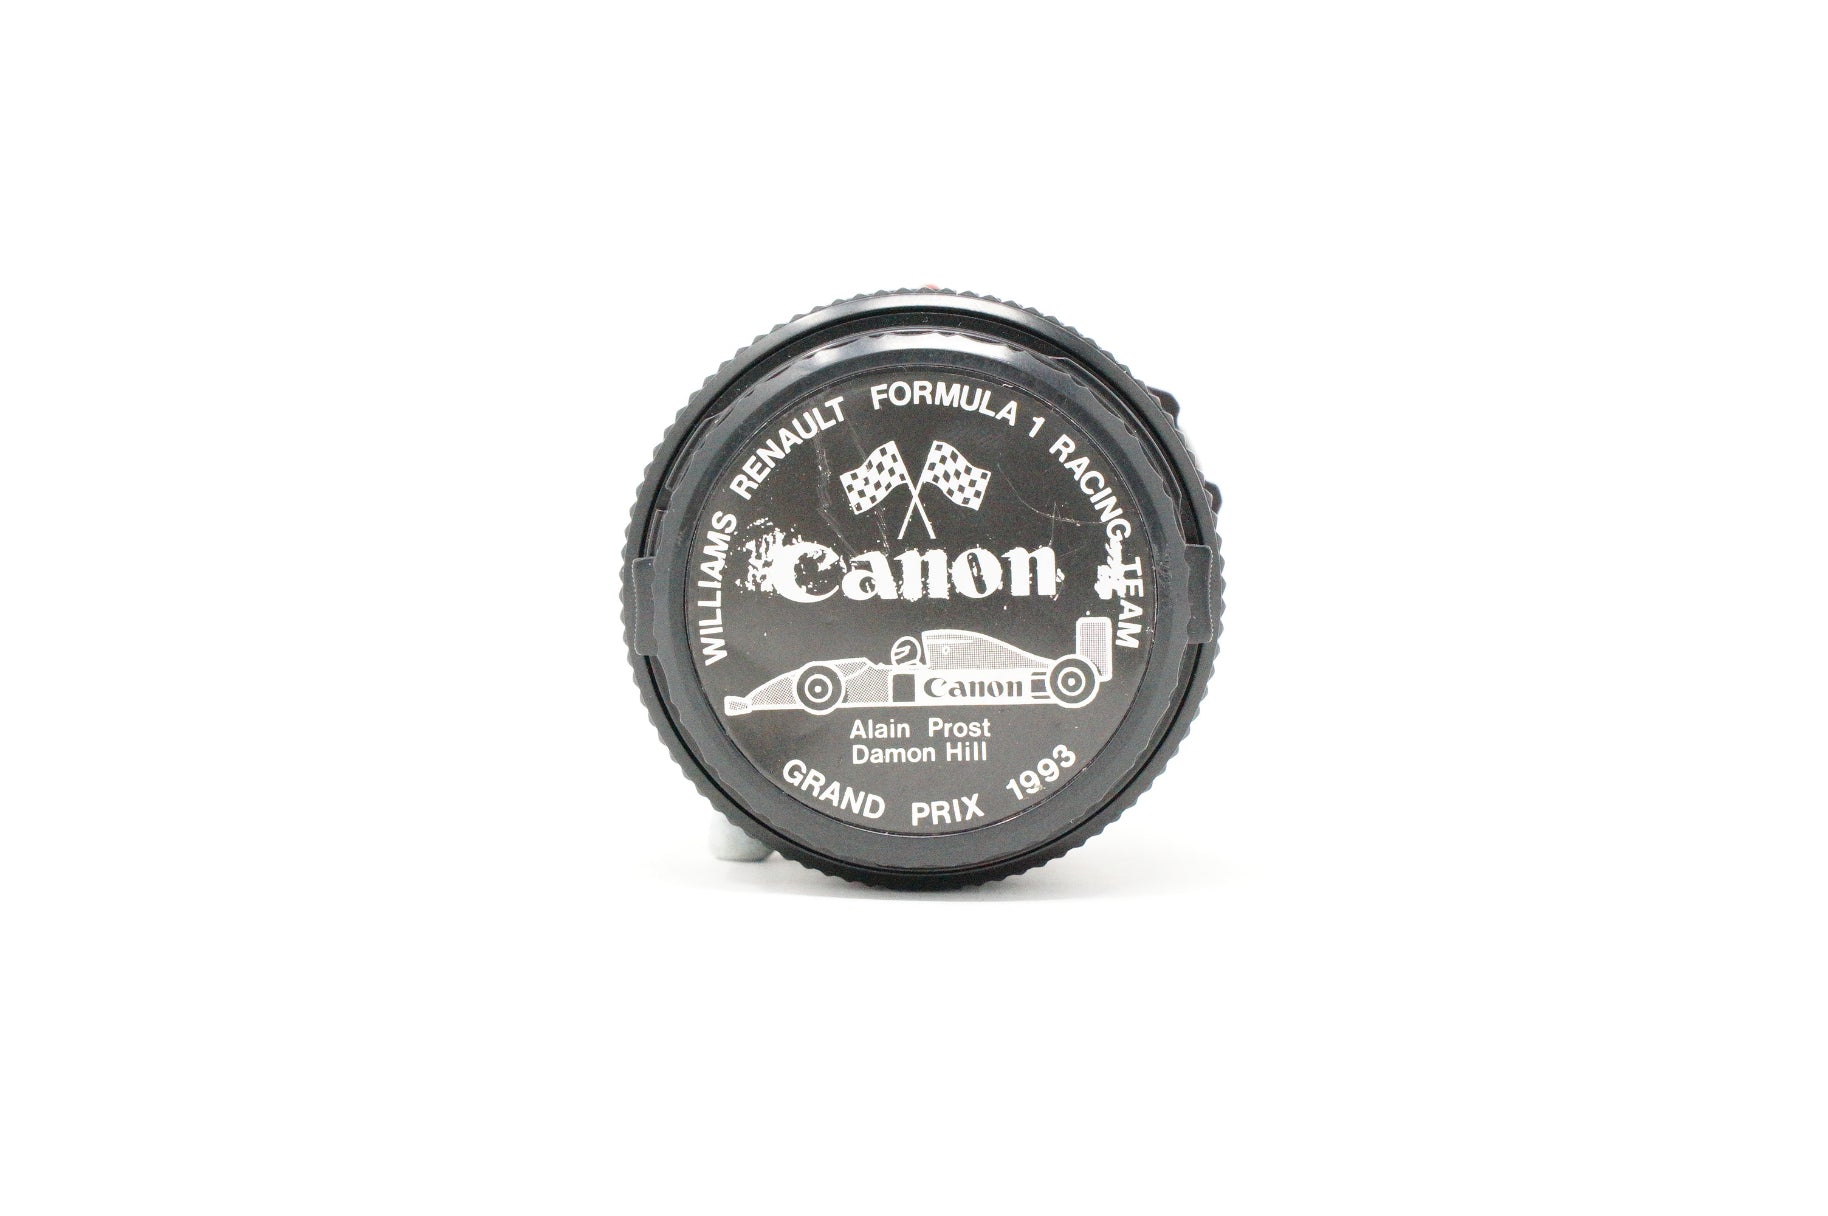 Used Canon 50mm F1.4 FD lens 1993 Williams Renault Formula 1 Edition Rare